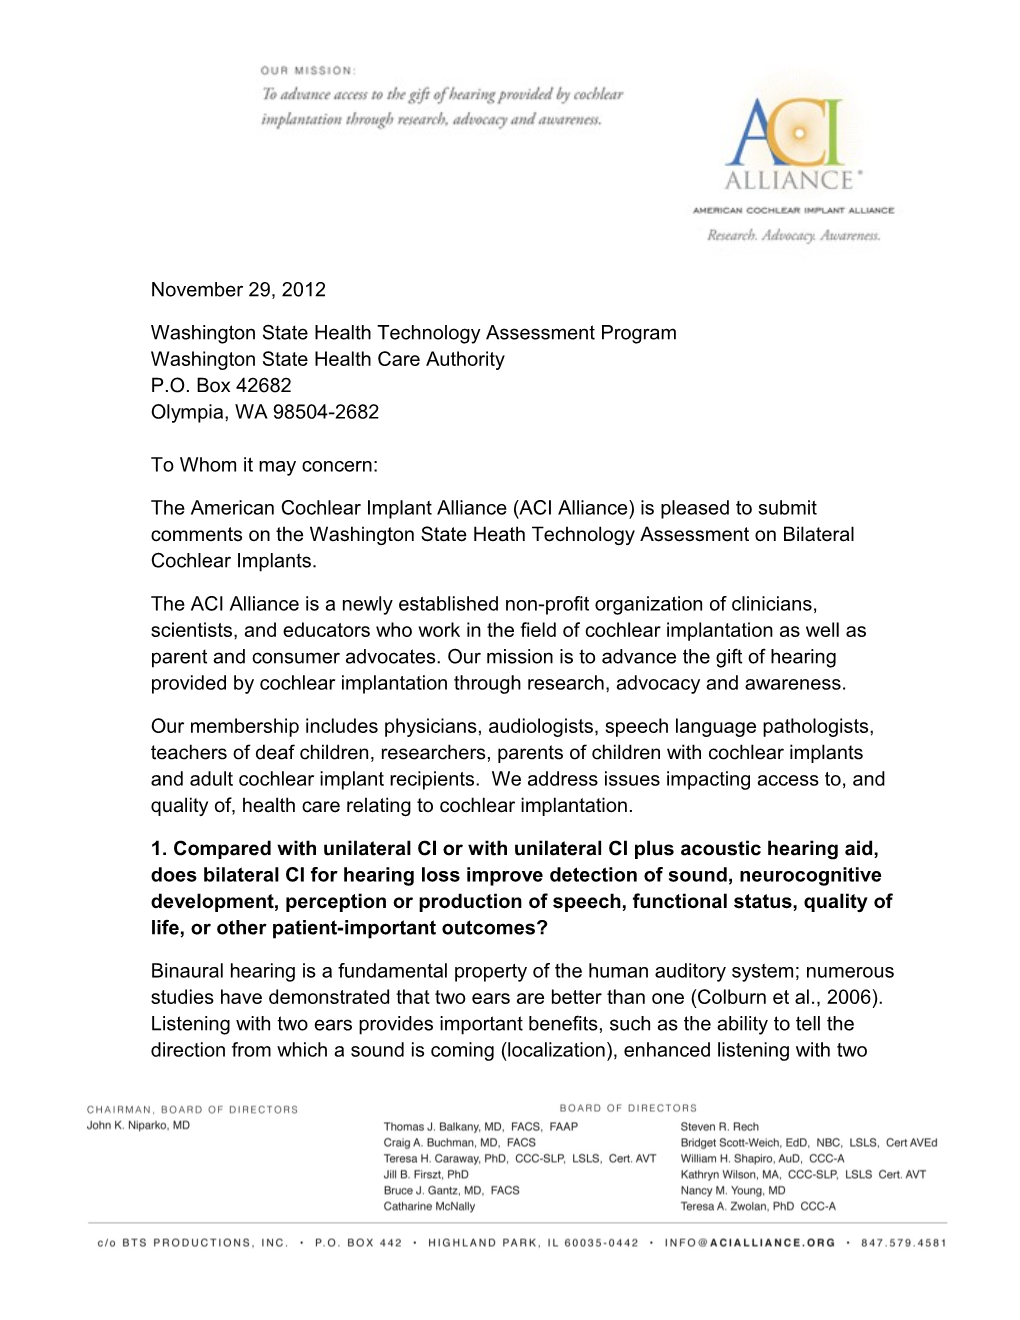 Washington State Health Technology Assessment Program